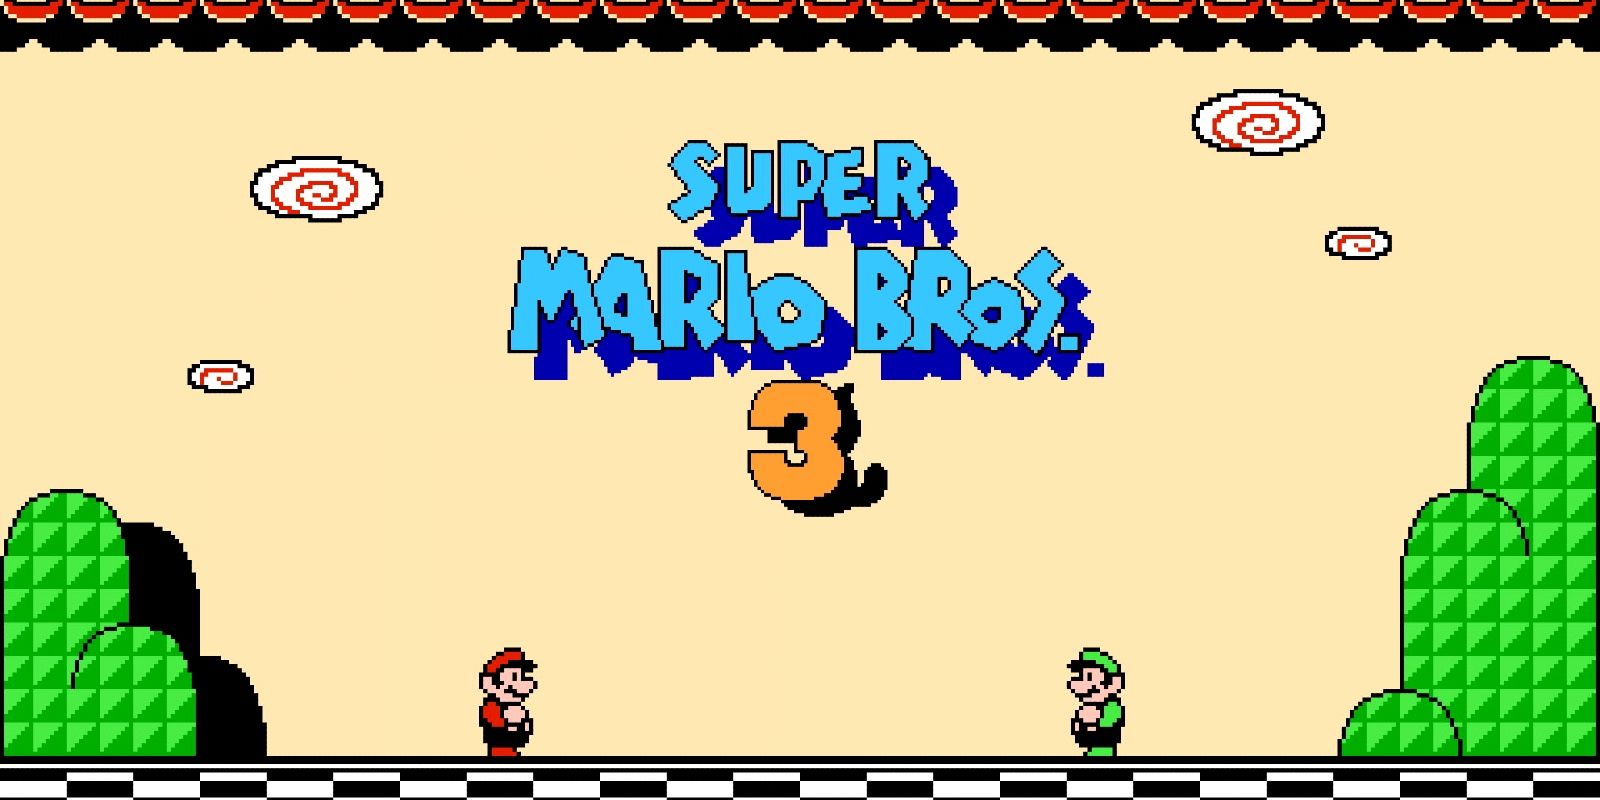 Mario and Luigi on the title screen for Super Mario Bros. 3